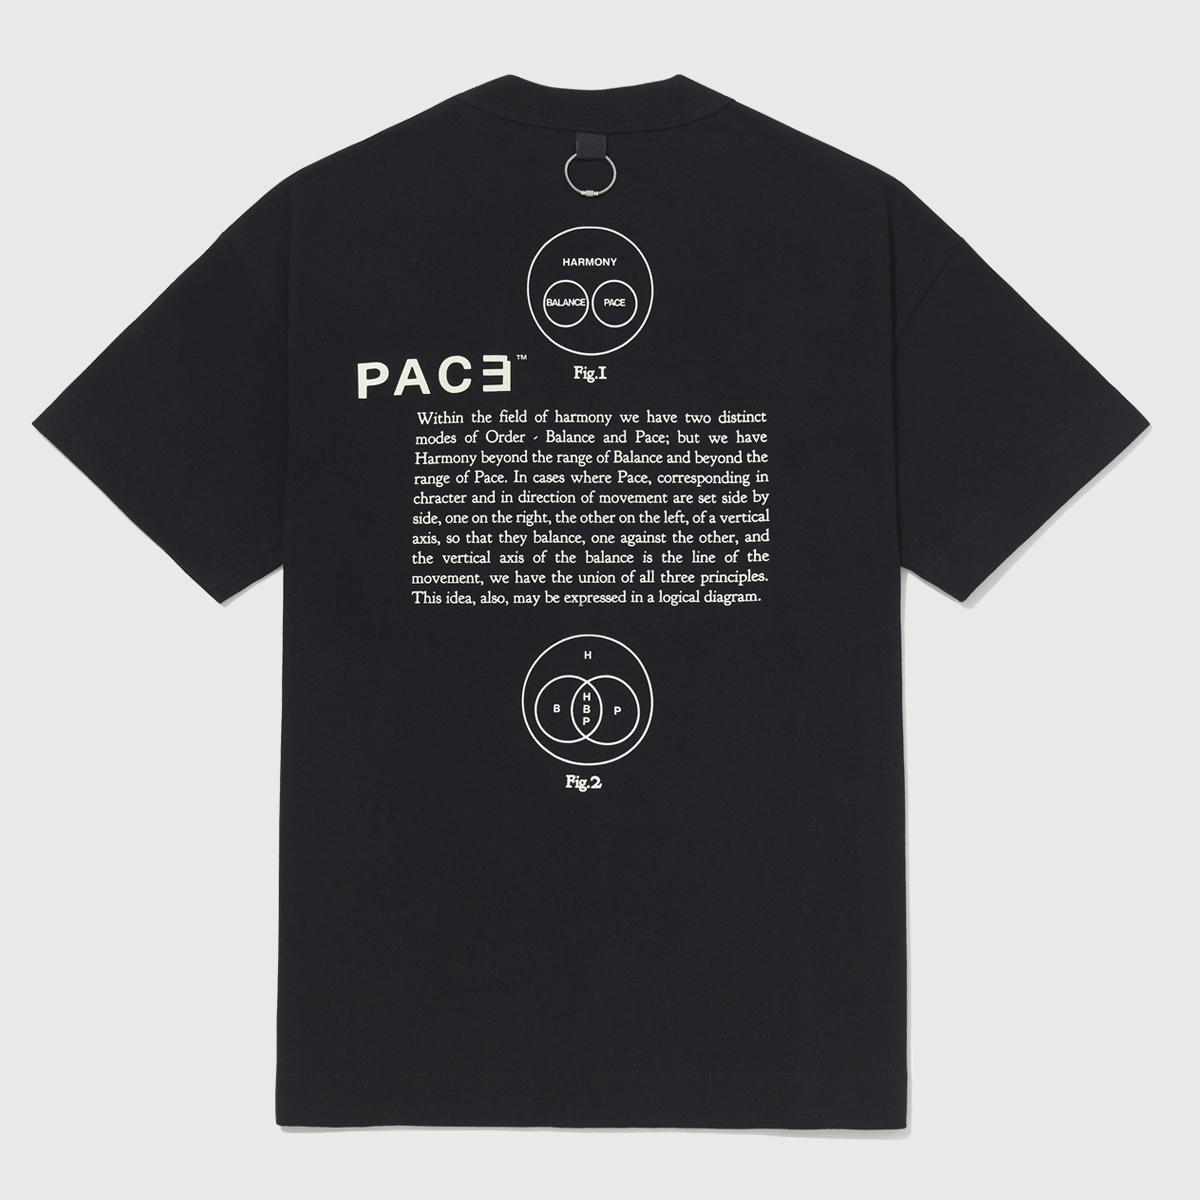 Camiseta Pace Harmony Balance And Pace Tee Black